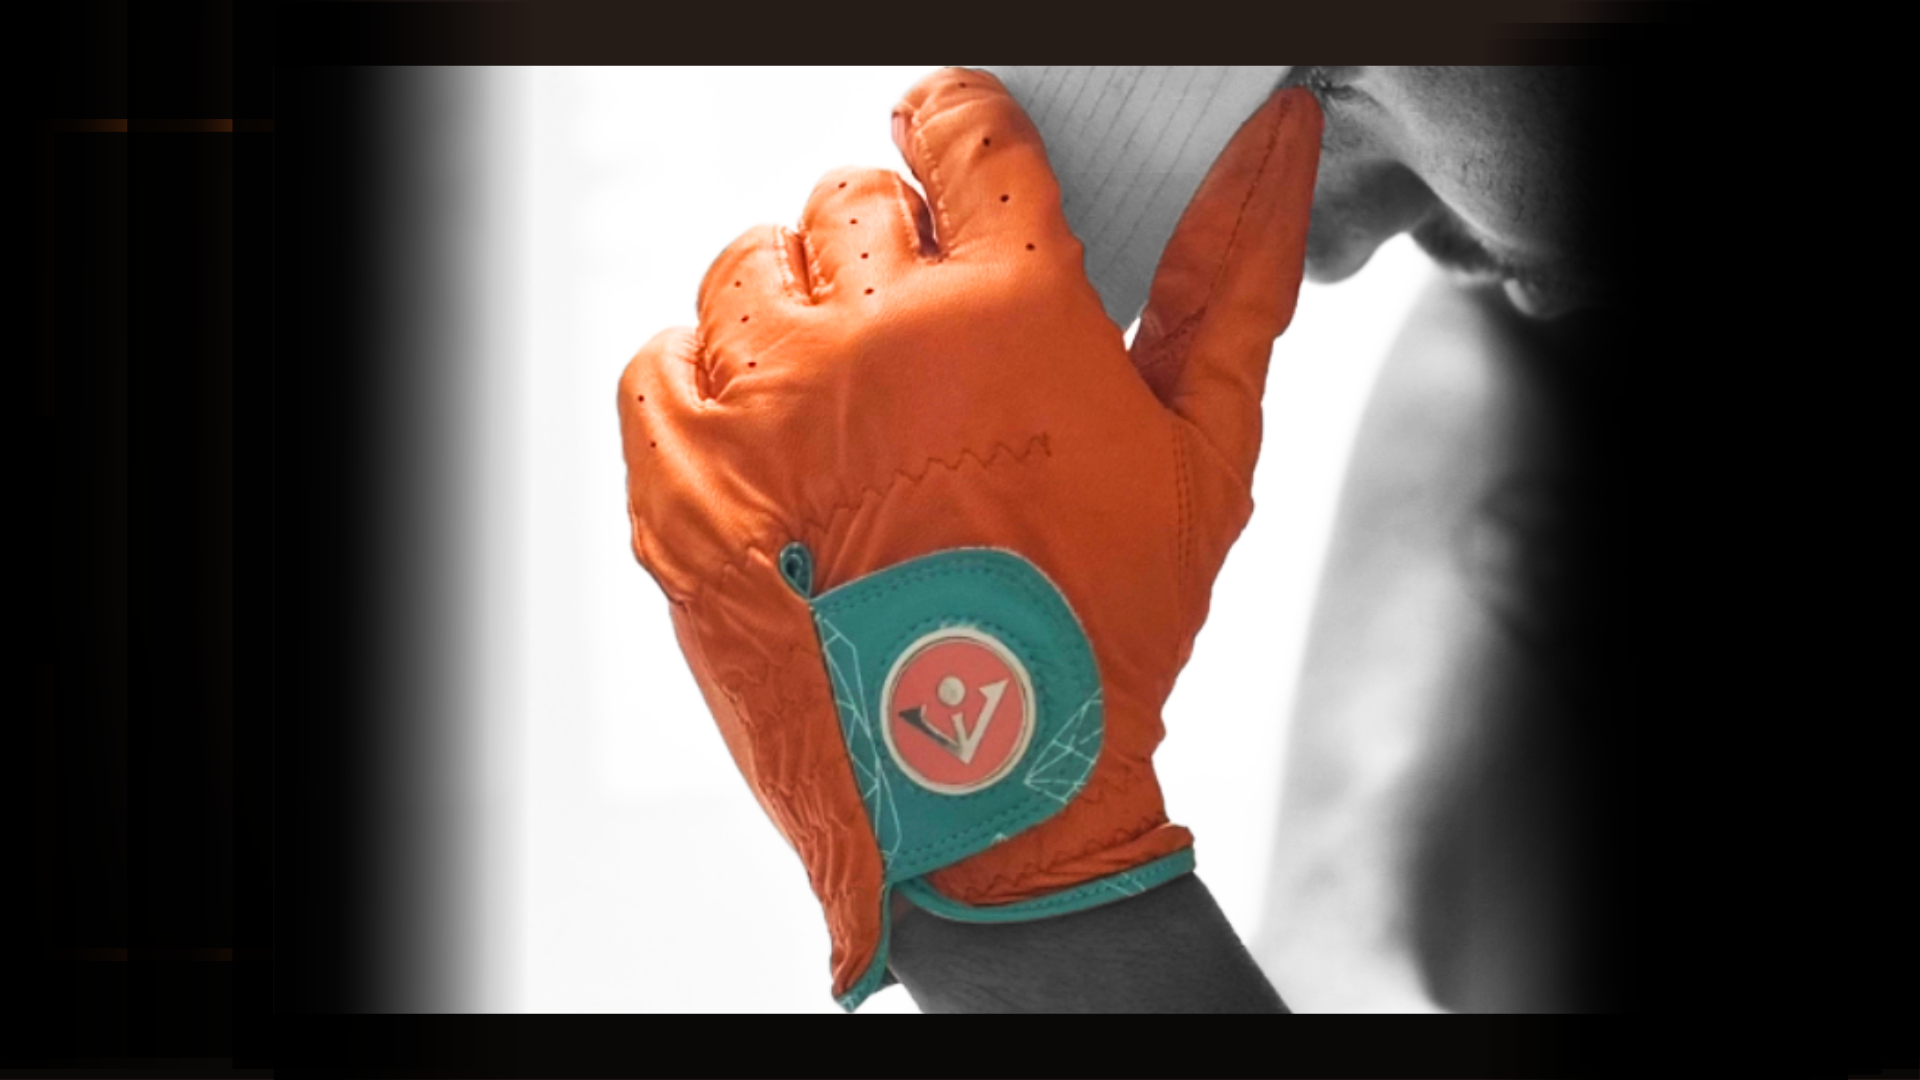 VivanTee colorful golf glove in vibrant orange and tiffany blue.  